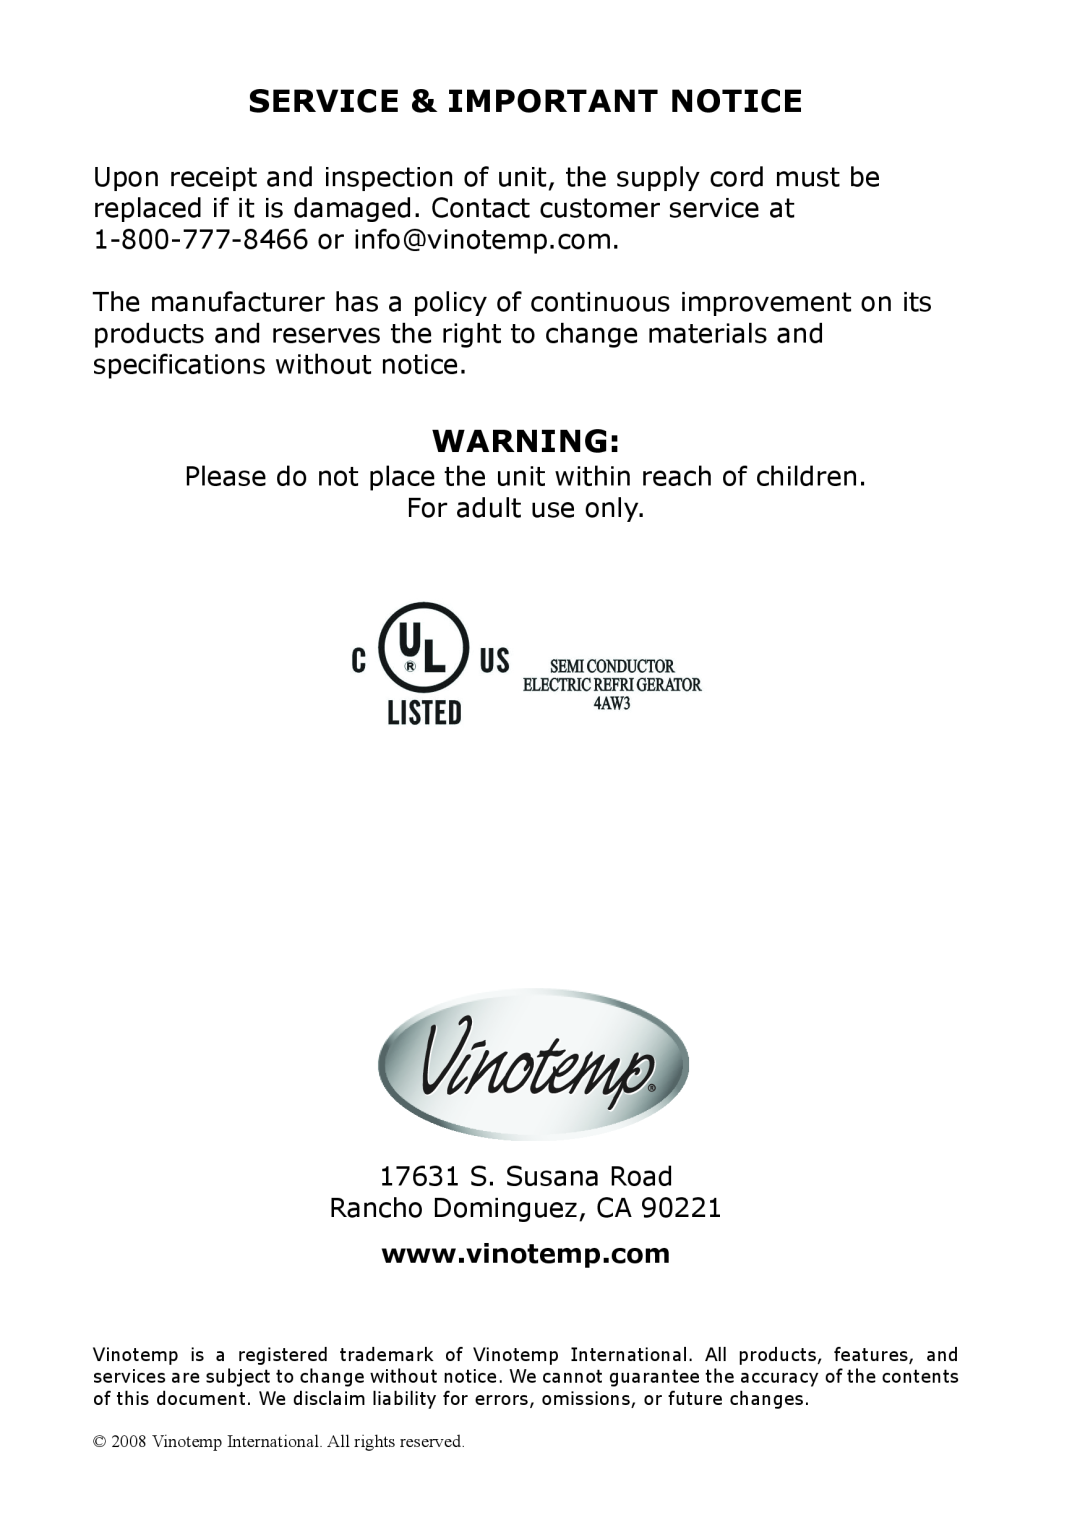 Vinotemp VT-18TEDS owner manual Service & Important Notice 